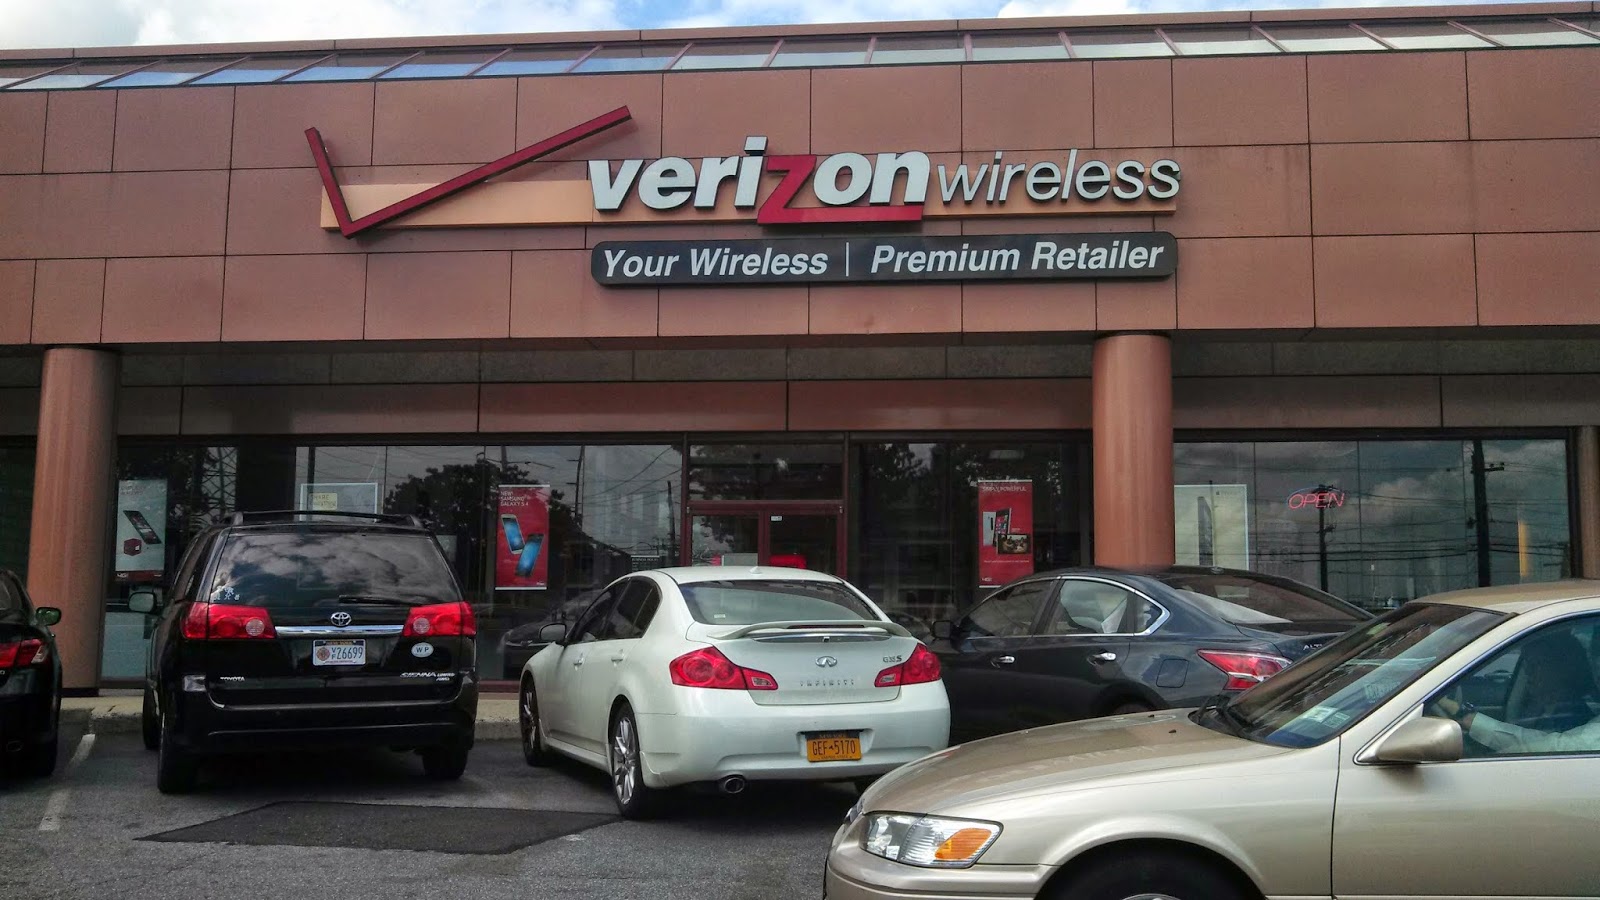 Photo of Garden City Verizon Wireless in Garden City, New York, United States - 1 Picture of Point of interest, Establishment, Store